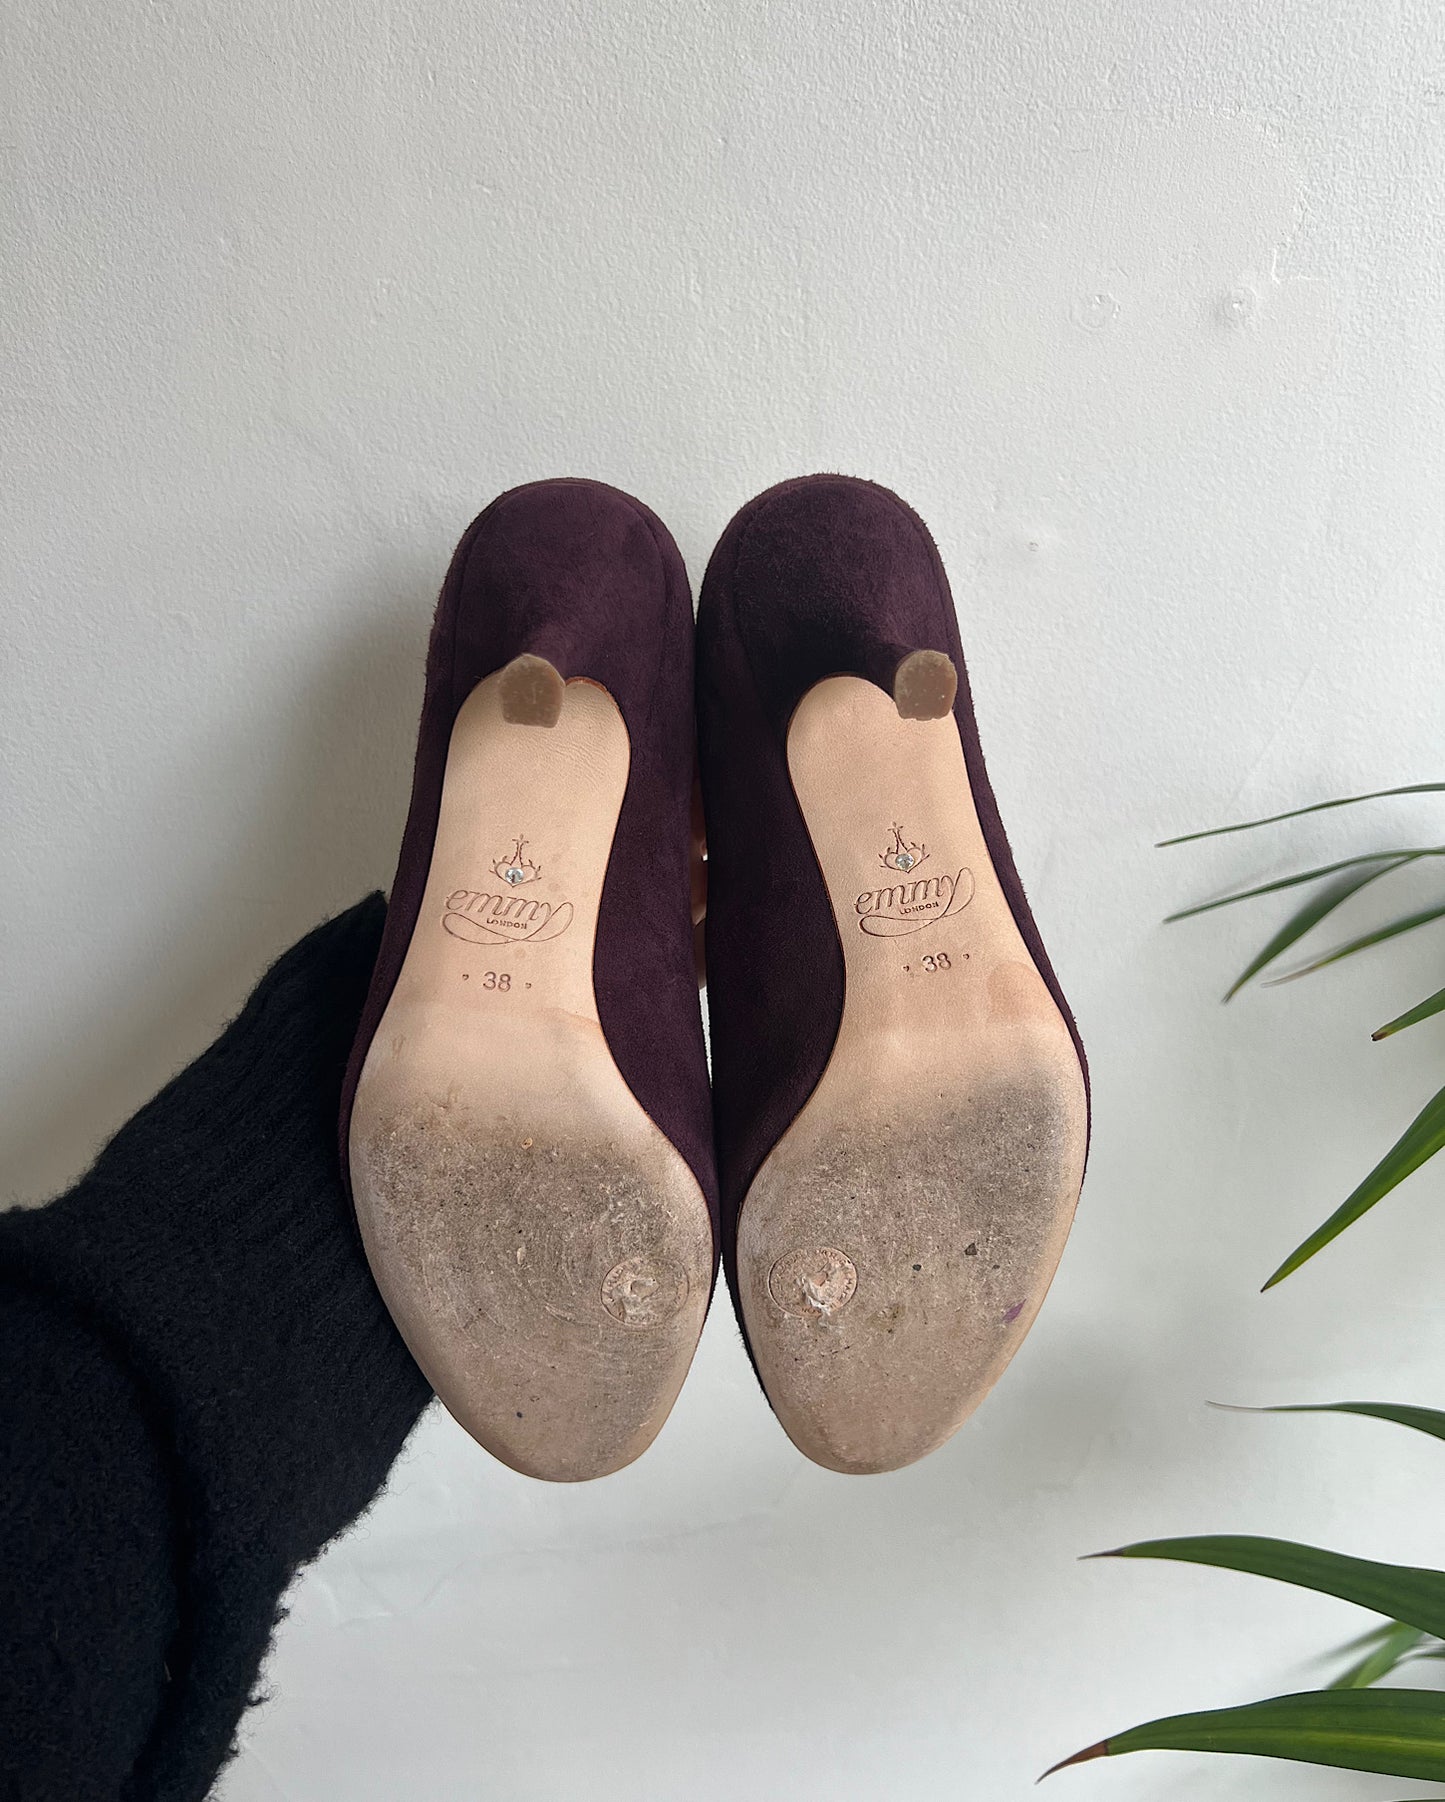 SALE - Purple / Aubergine Suede Heels - Size 5